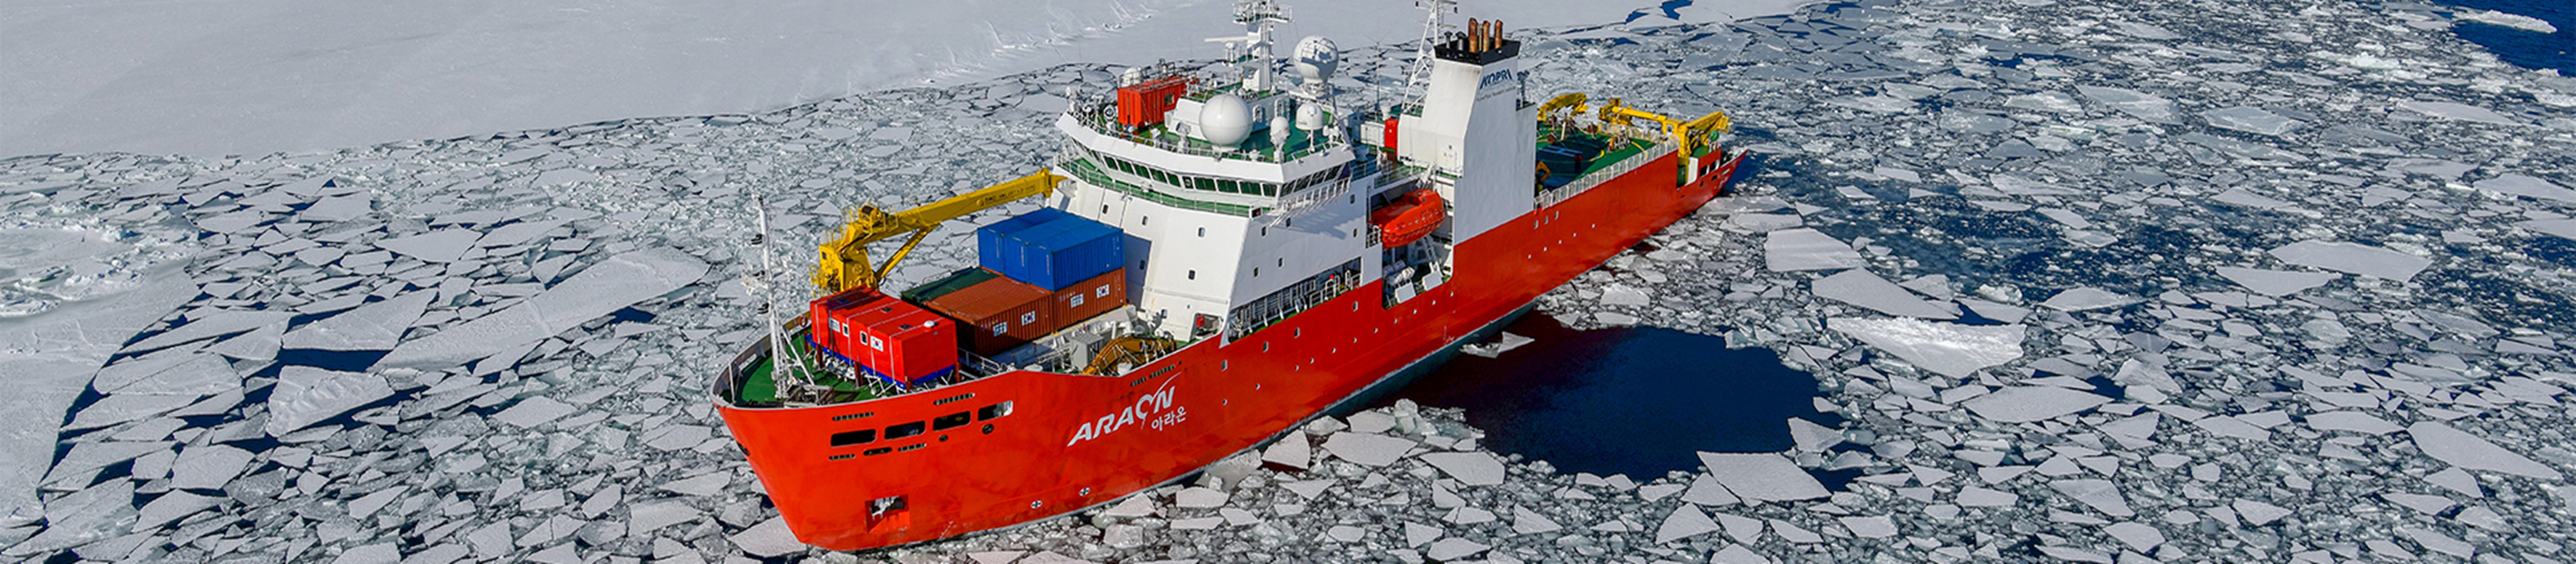 Icebreaking research vessel RV Araon